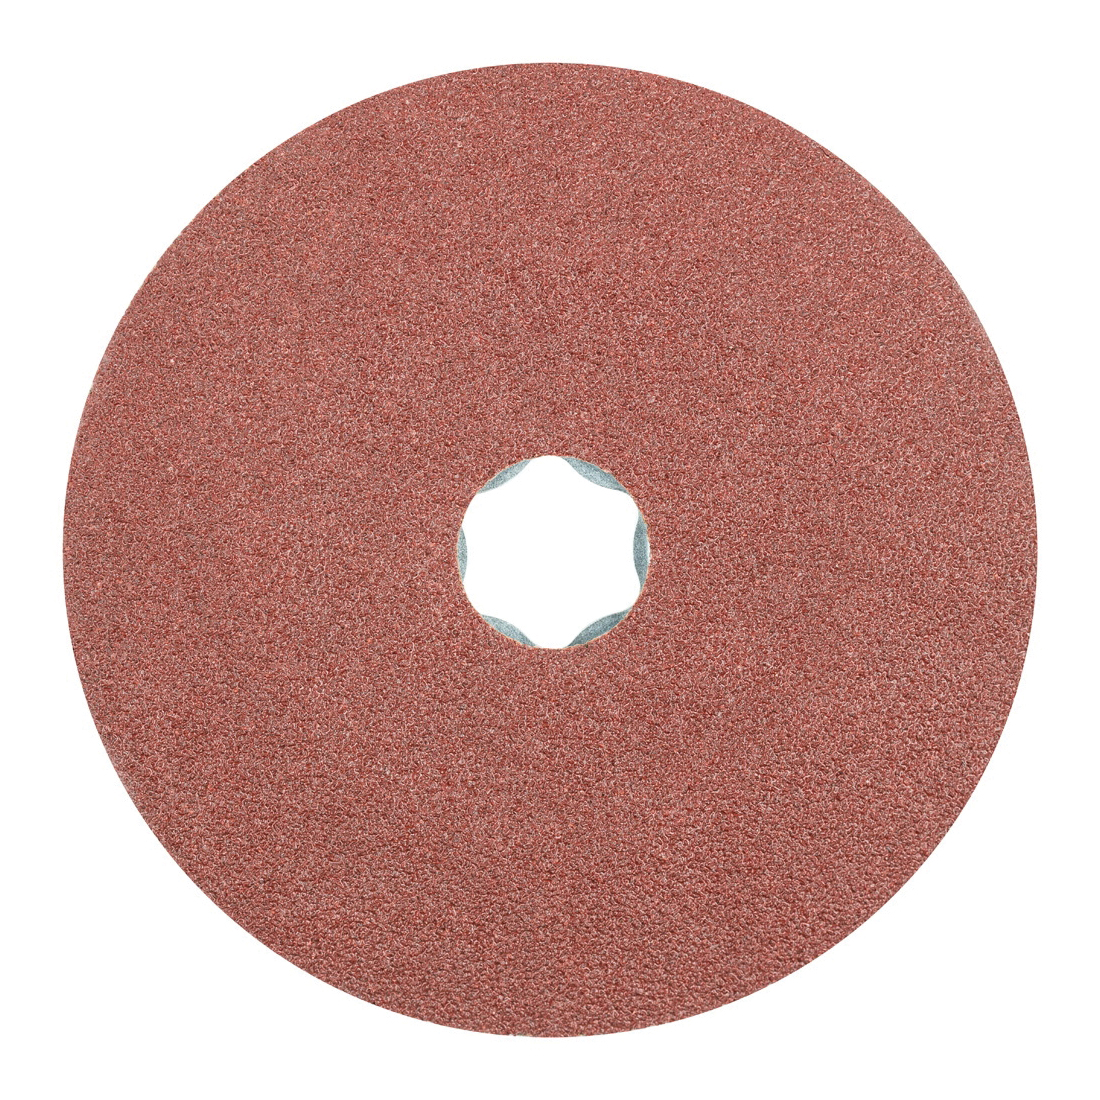 PFERD COMBICLICK® 40093 Coated Abrasive Disc, 4-1/2 in Dia, 50 Grit, Aluminum Oxide Abrasive